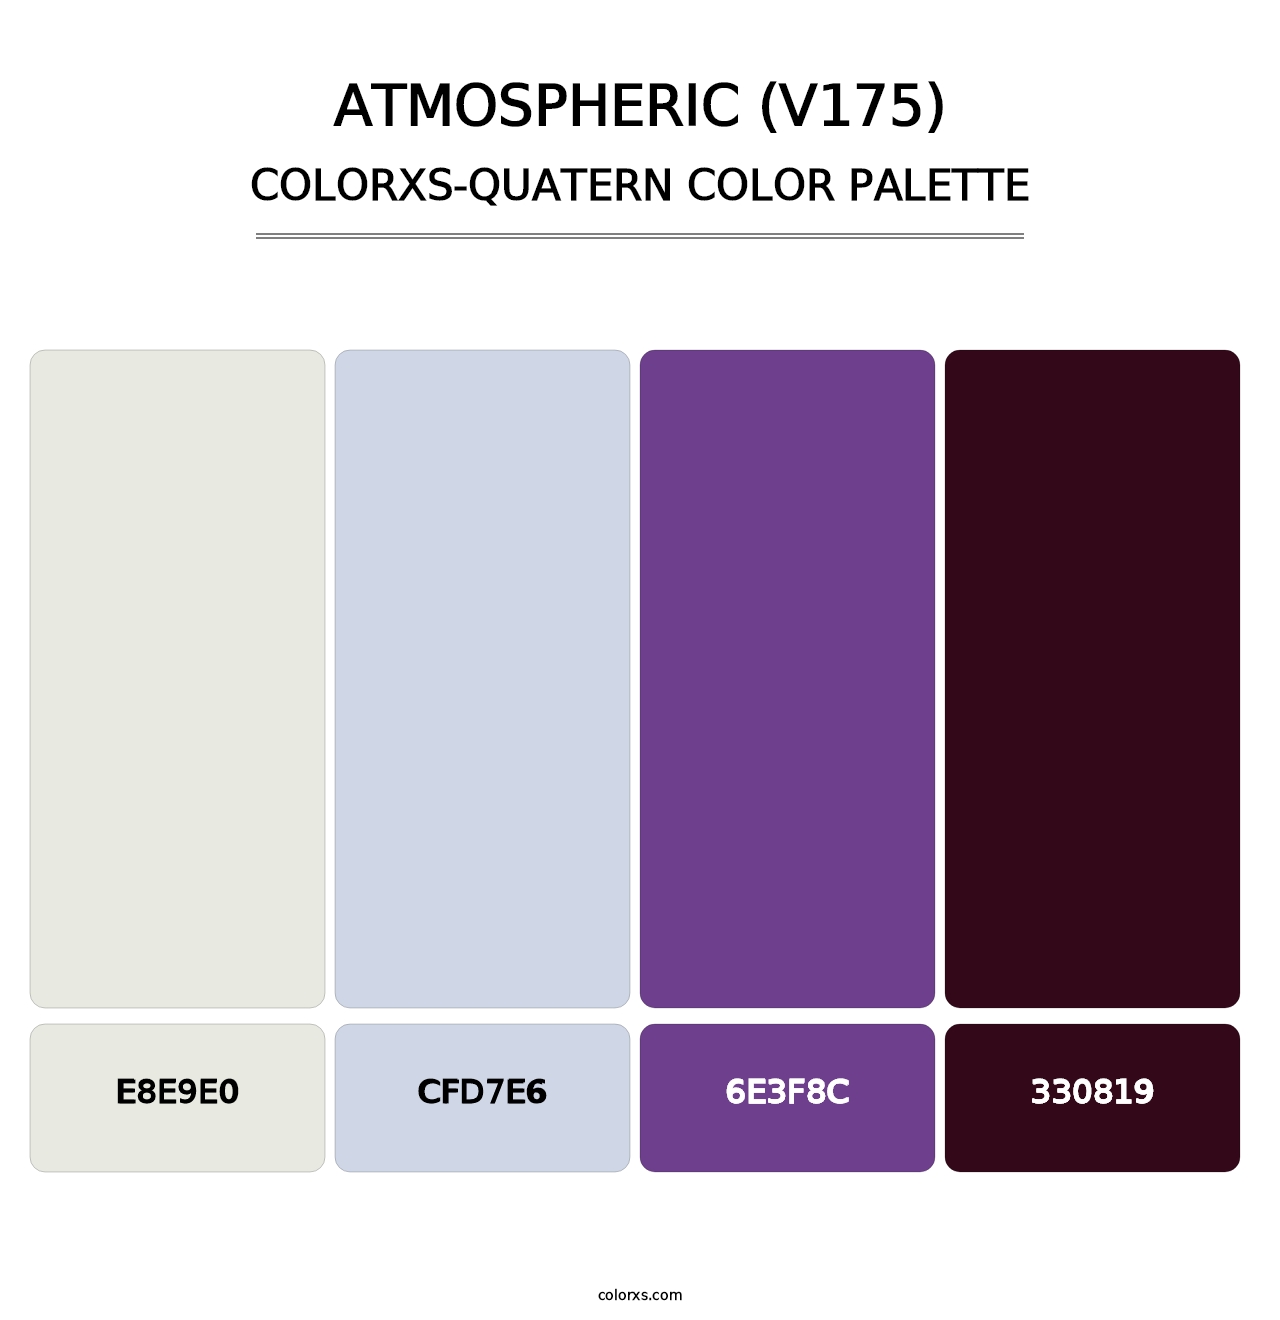 Atmospheric (V175) - Colorxs Quatern Palette